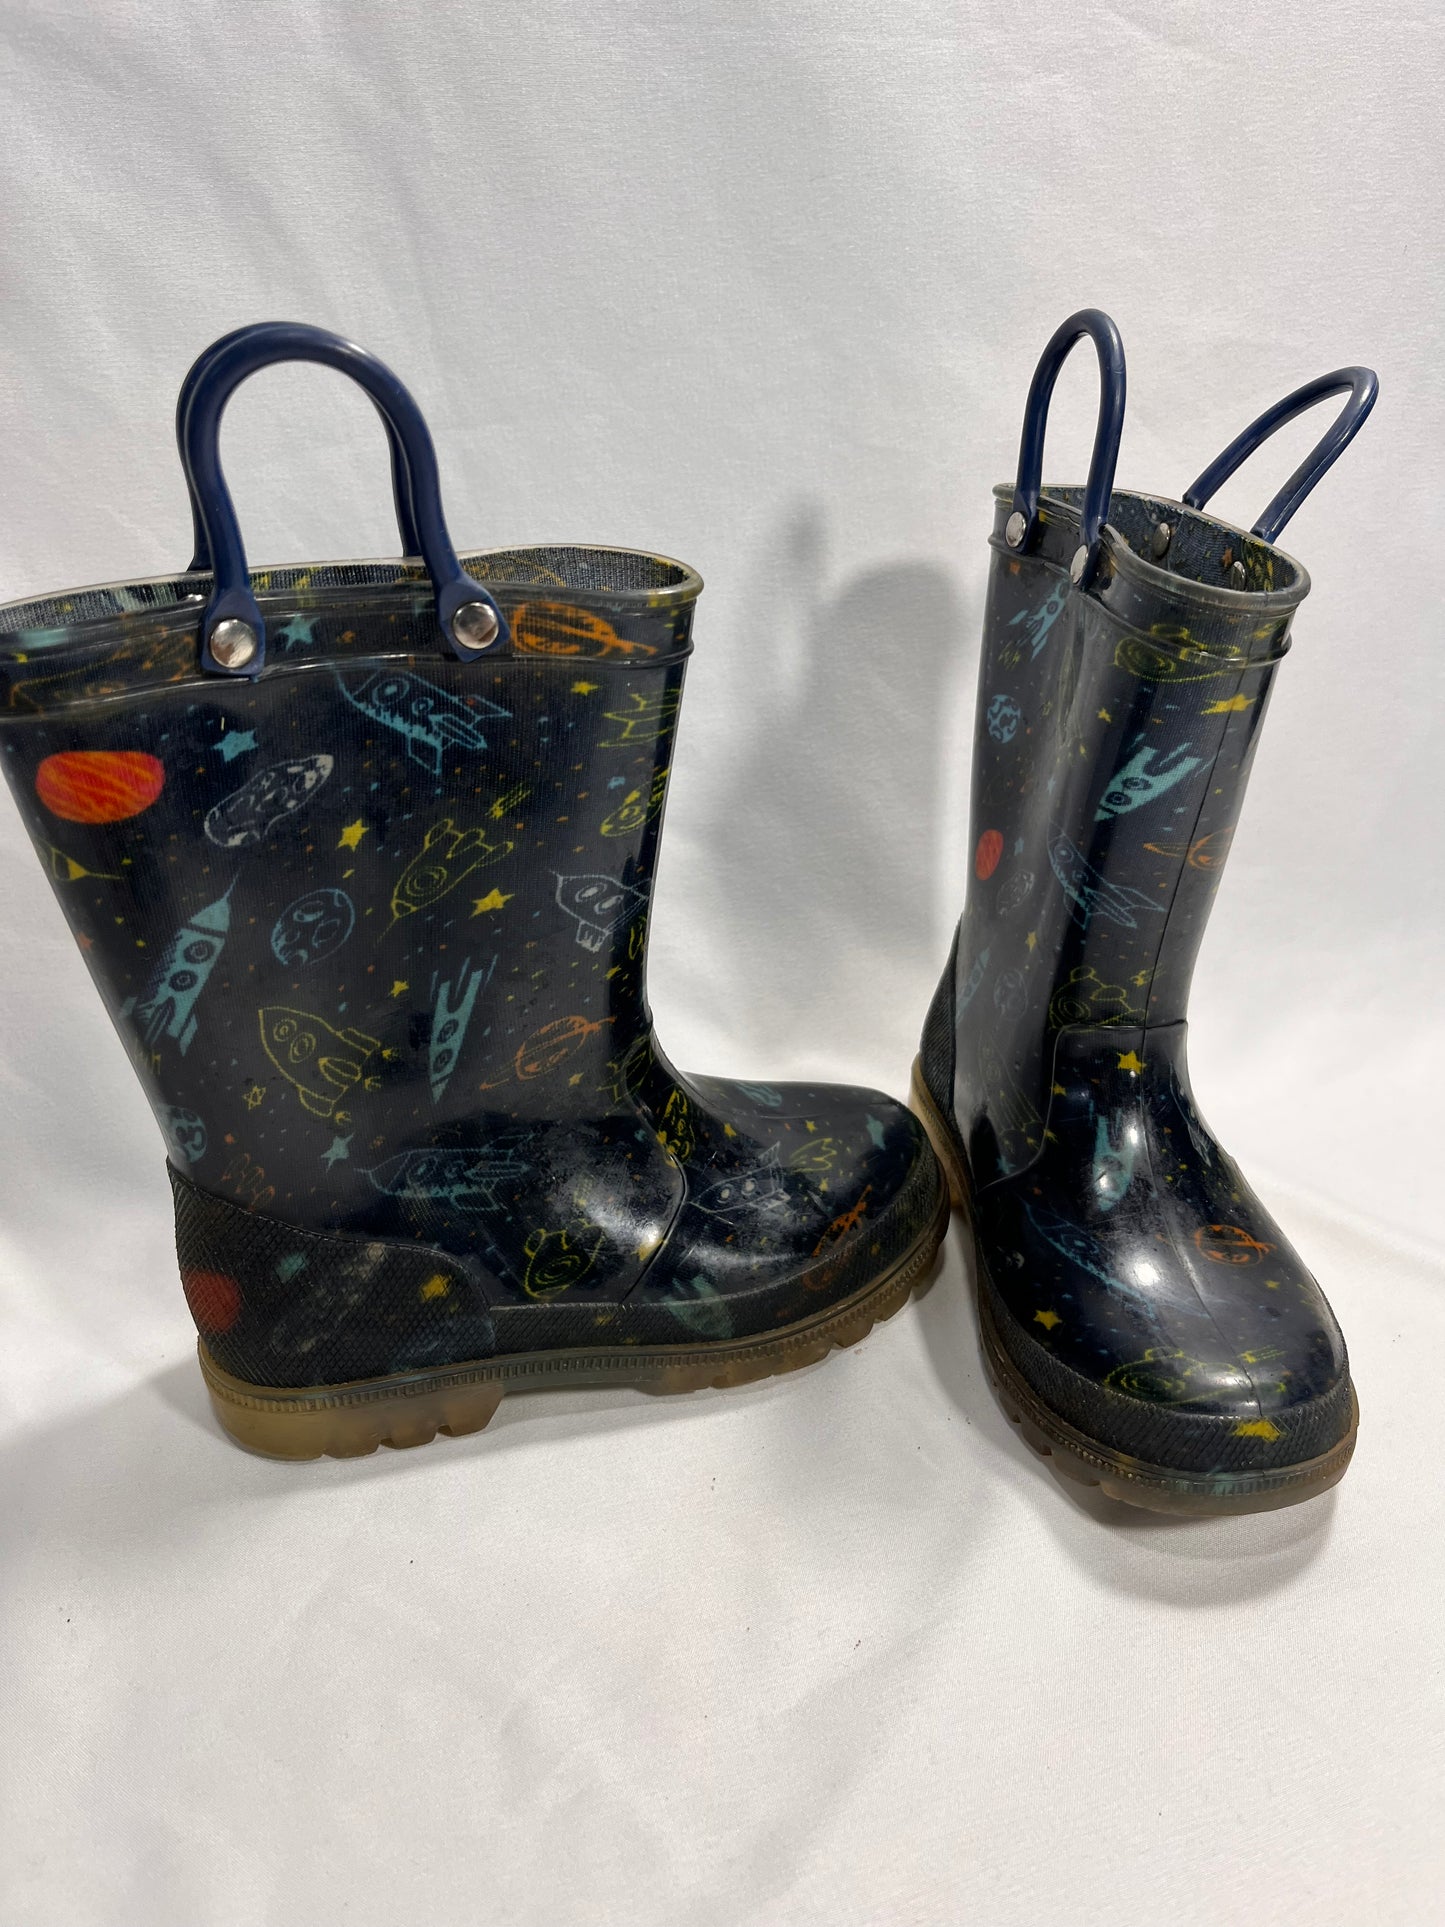 Boys size 9 rain boots